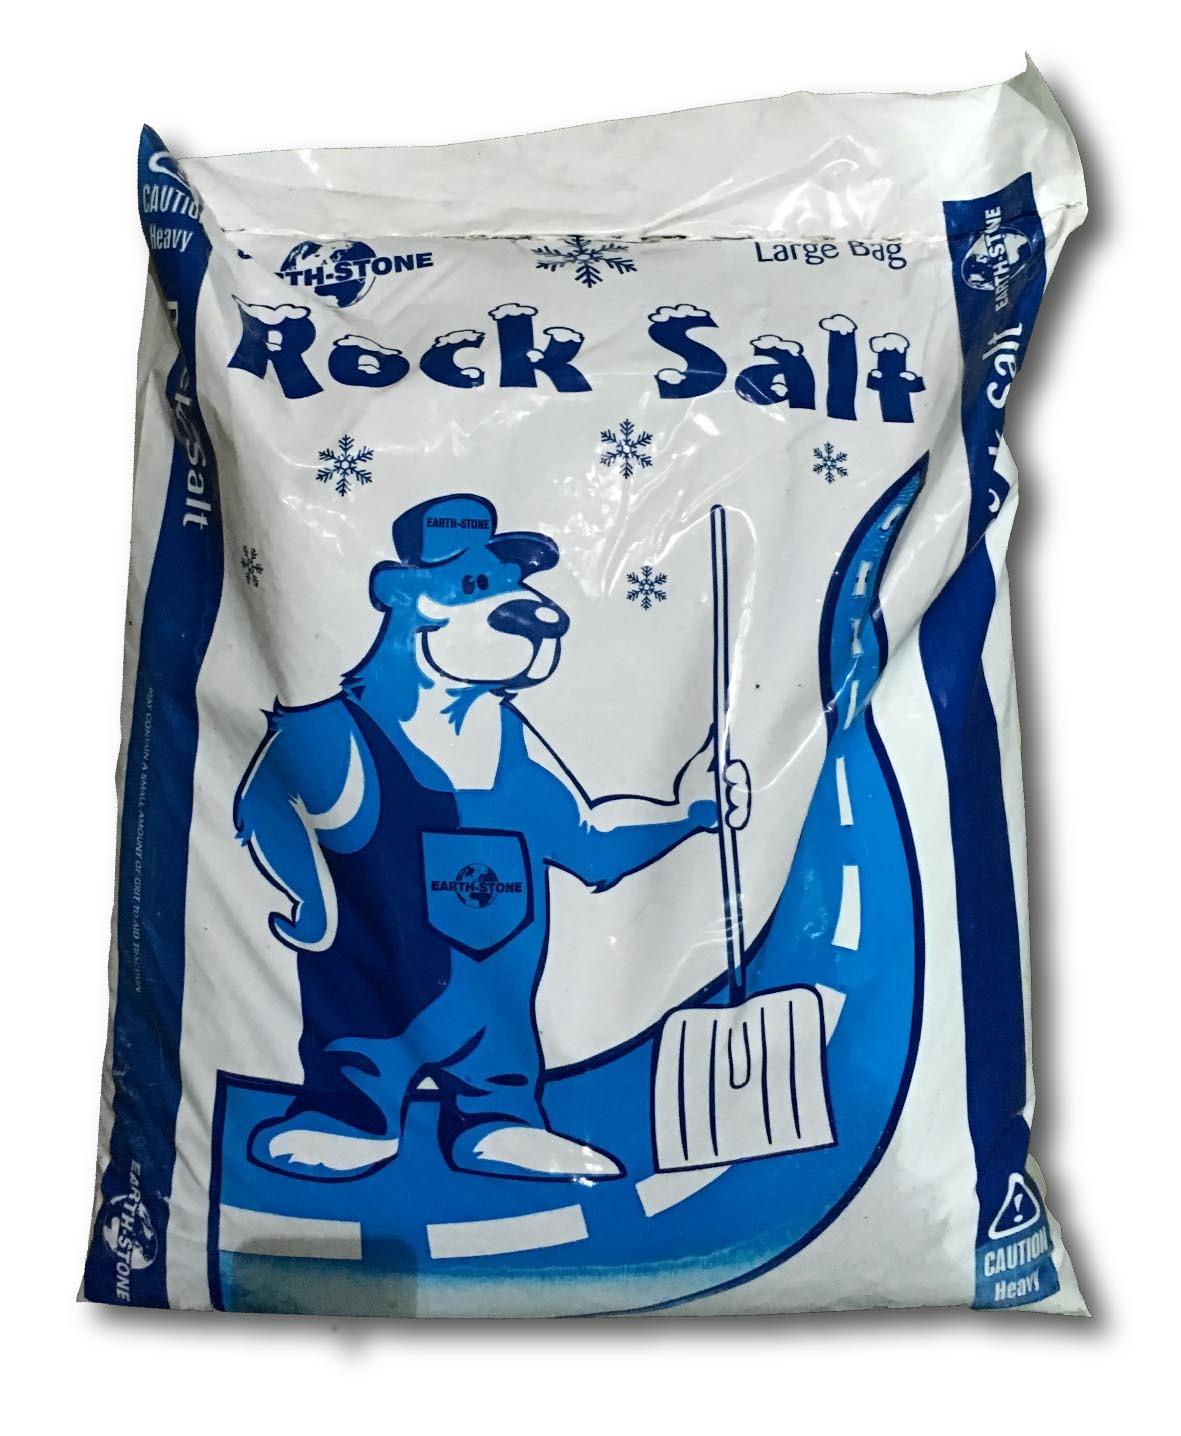 Brown Rock salt